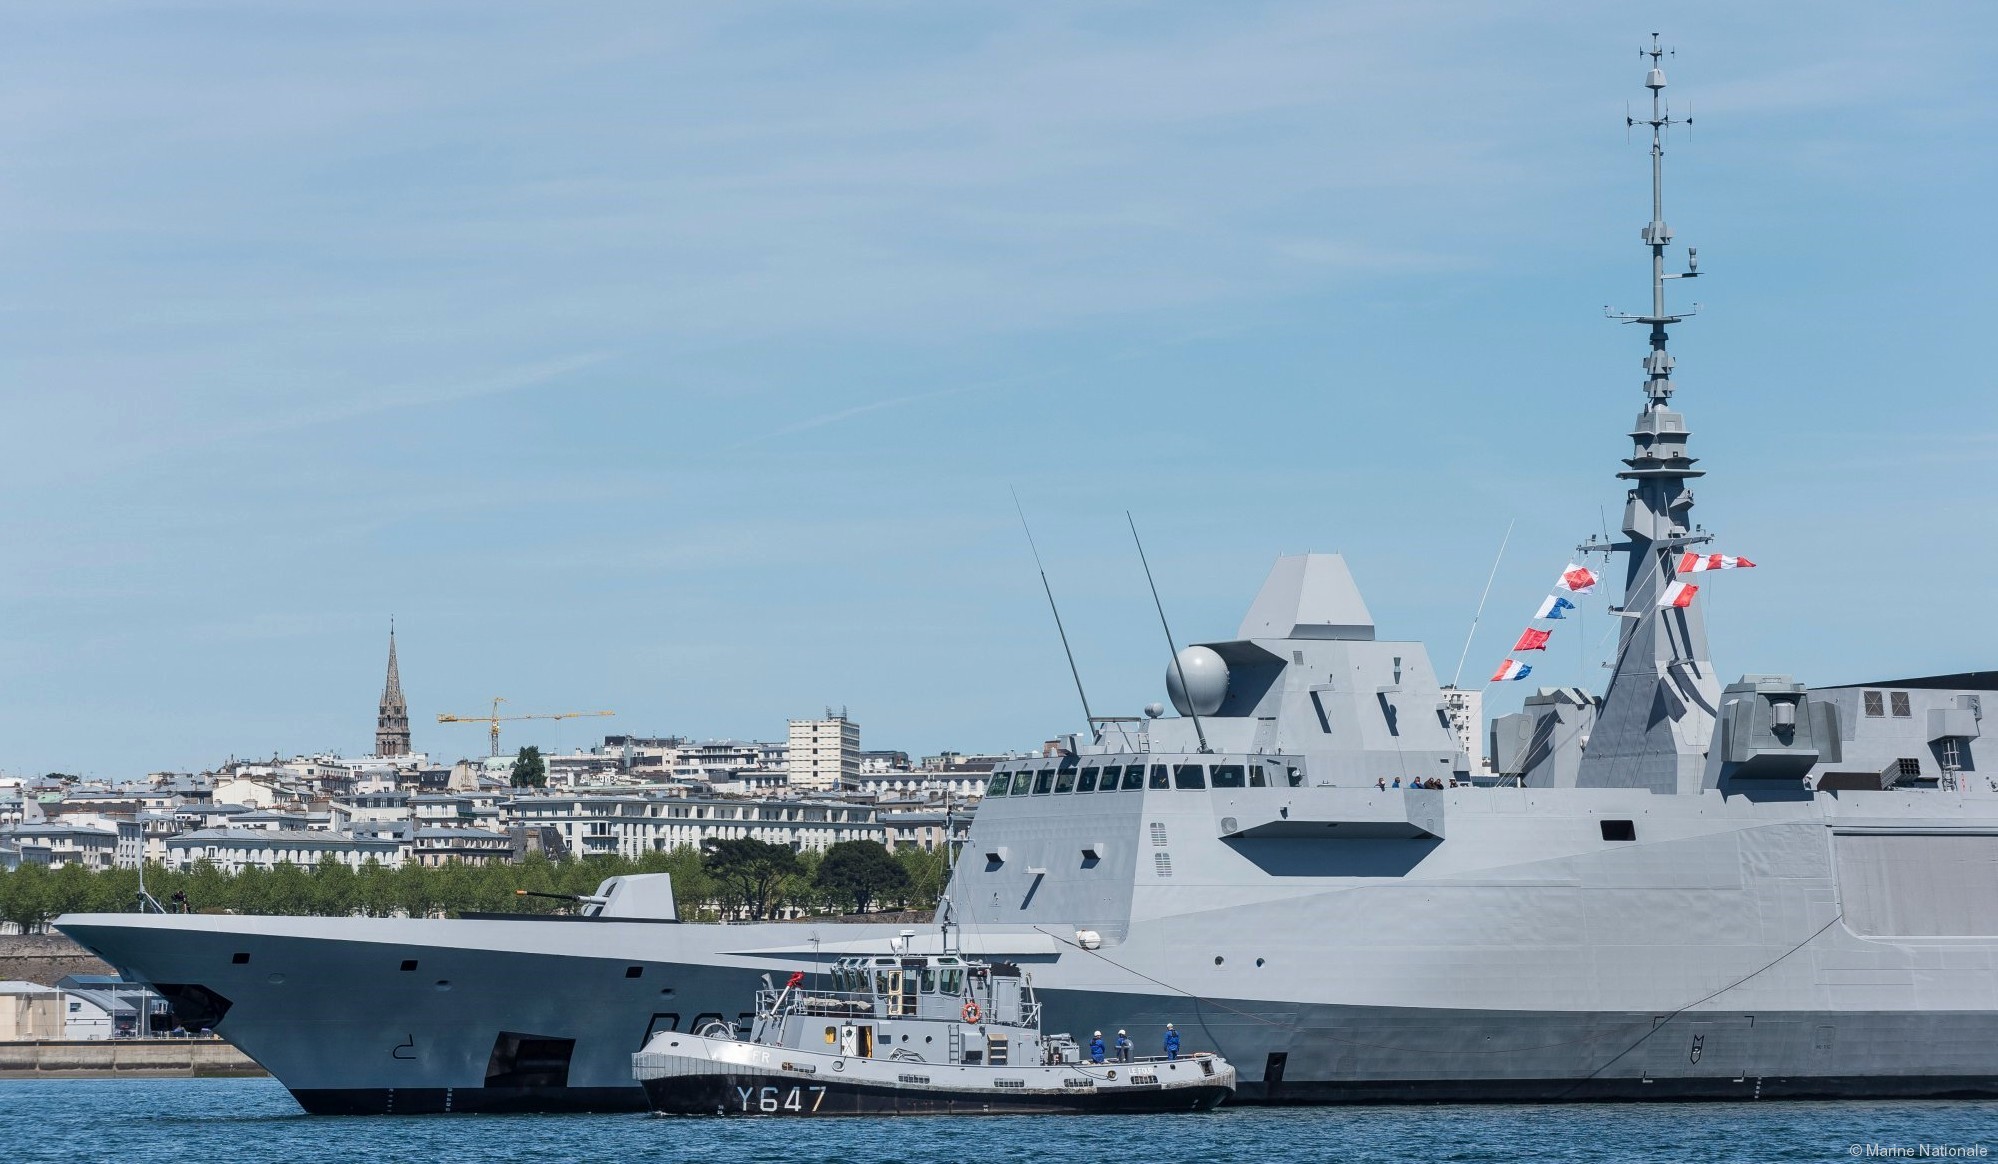 d-655 fs bretagne fremm aquitaine class frigate fregate multi purpose french navy marine nationale 05